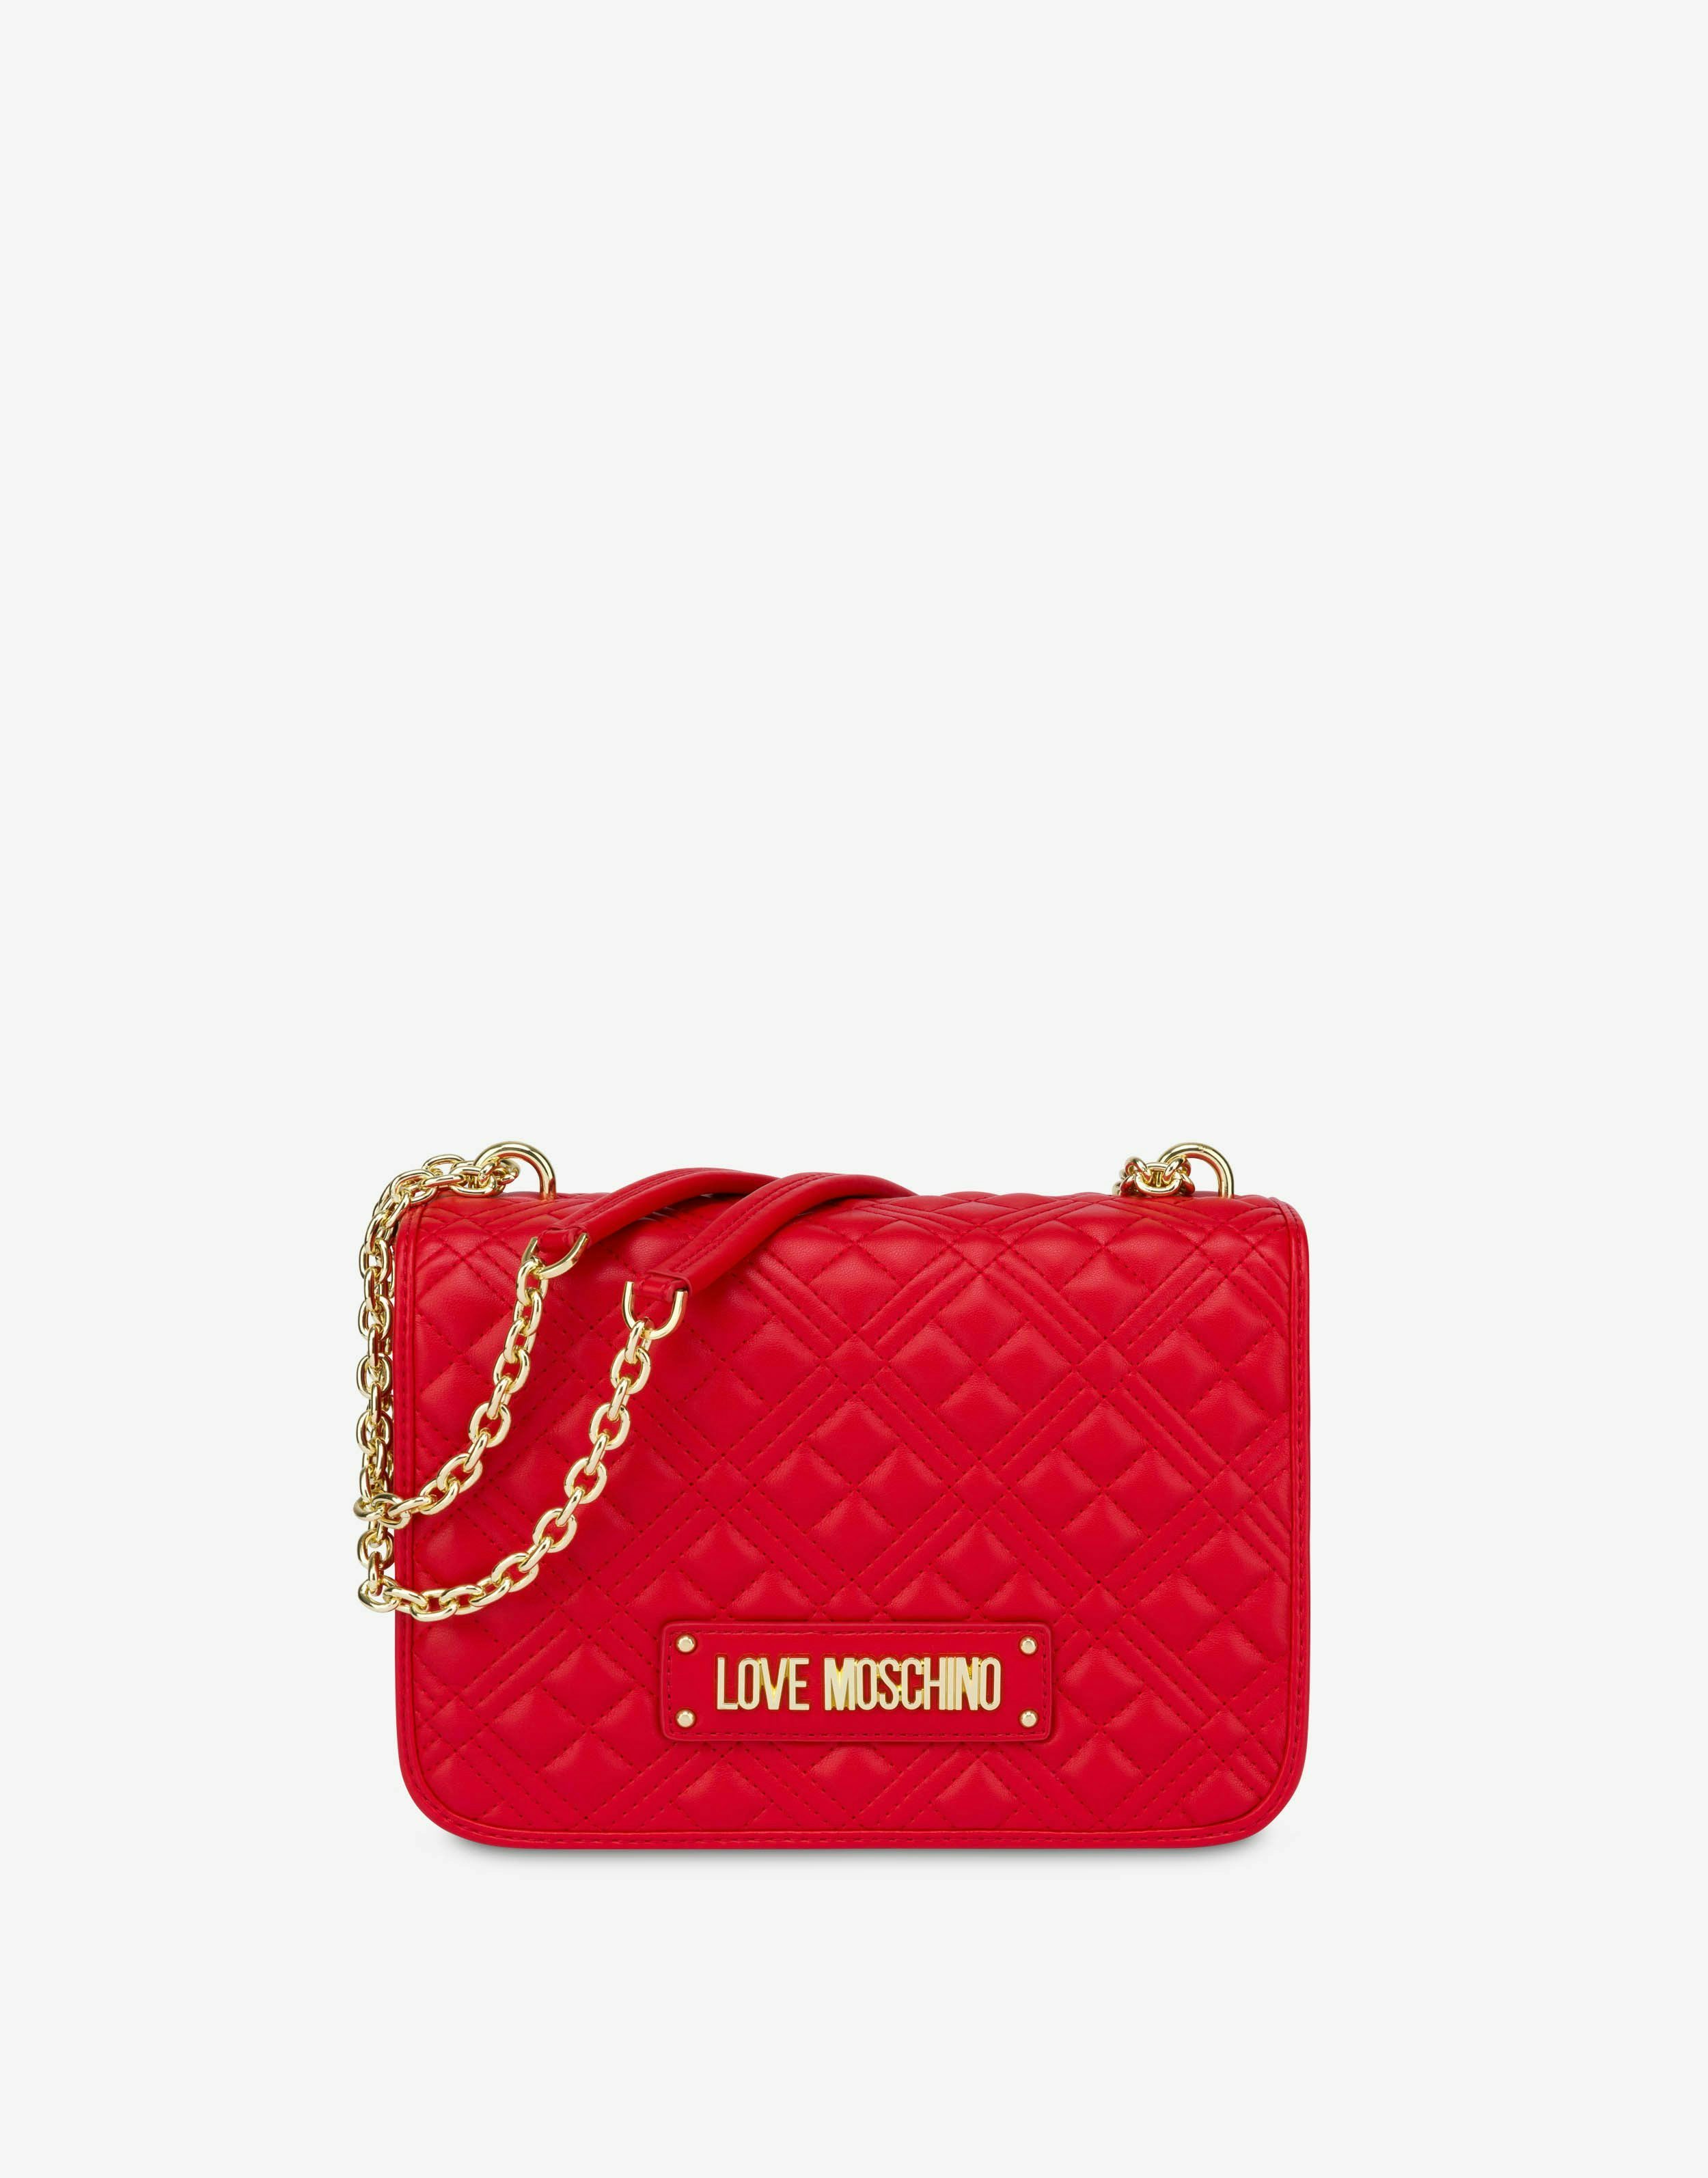 Women's handbag or shoulder bag LOVE MOSCHINO item JC4153PP17LO BORSA  CANVAS